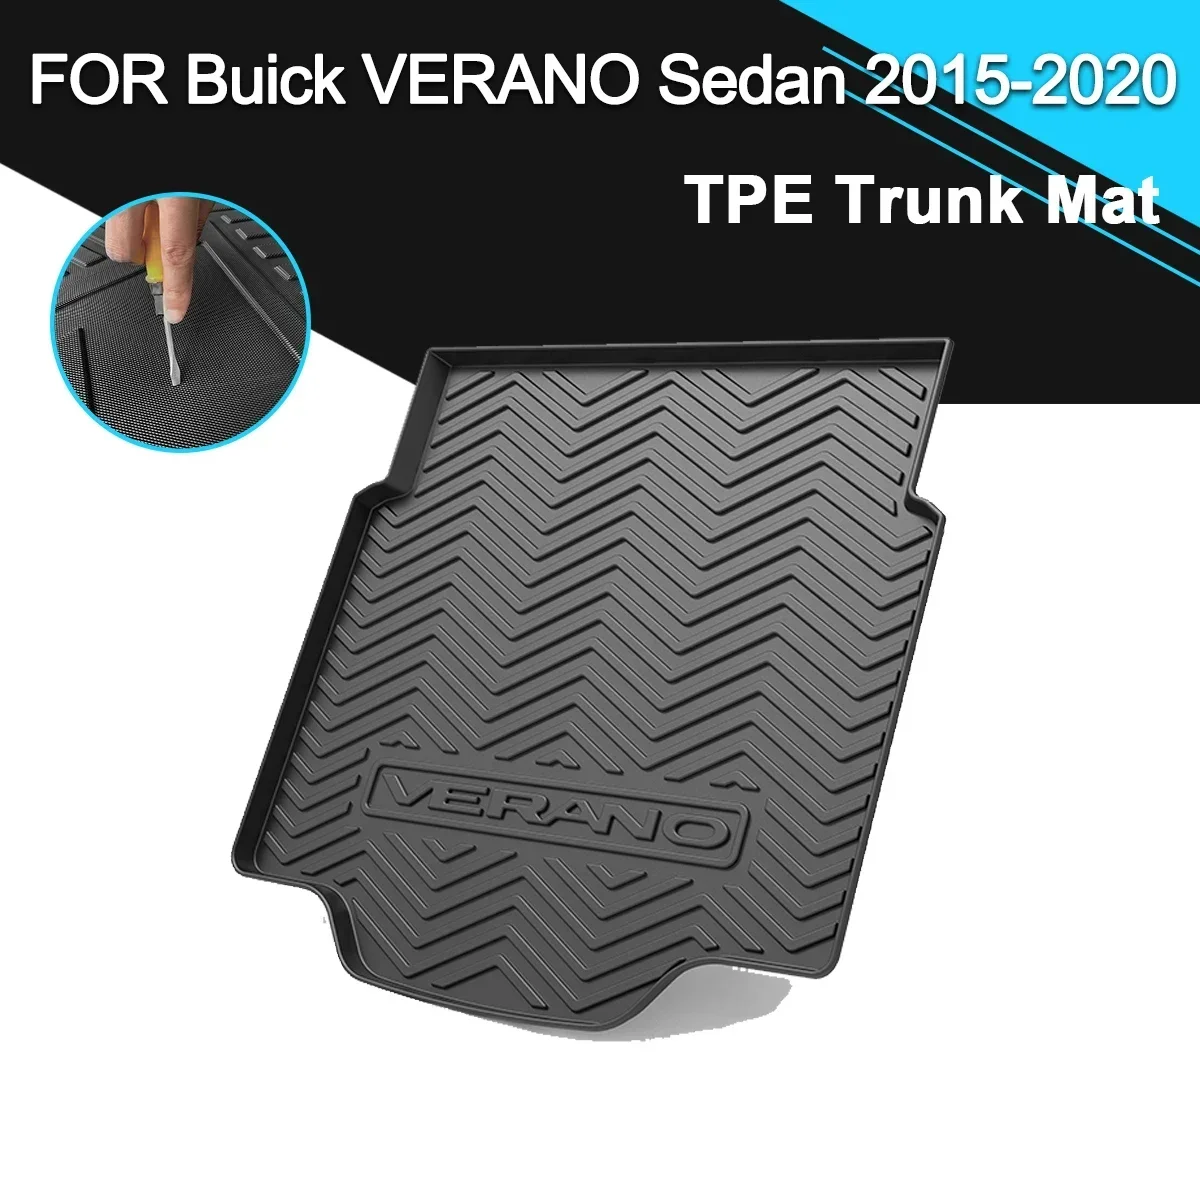 

Car Rear Trunk Cover Mat Rubber TPE Waterproof Non-Slip Cargo Liner Accessories For Buick VERANO Sedan 2015-2020